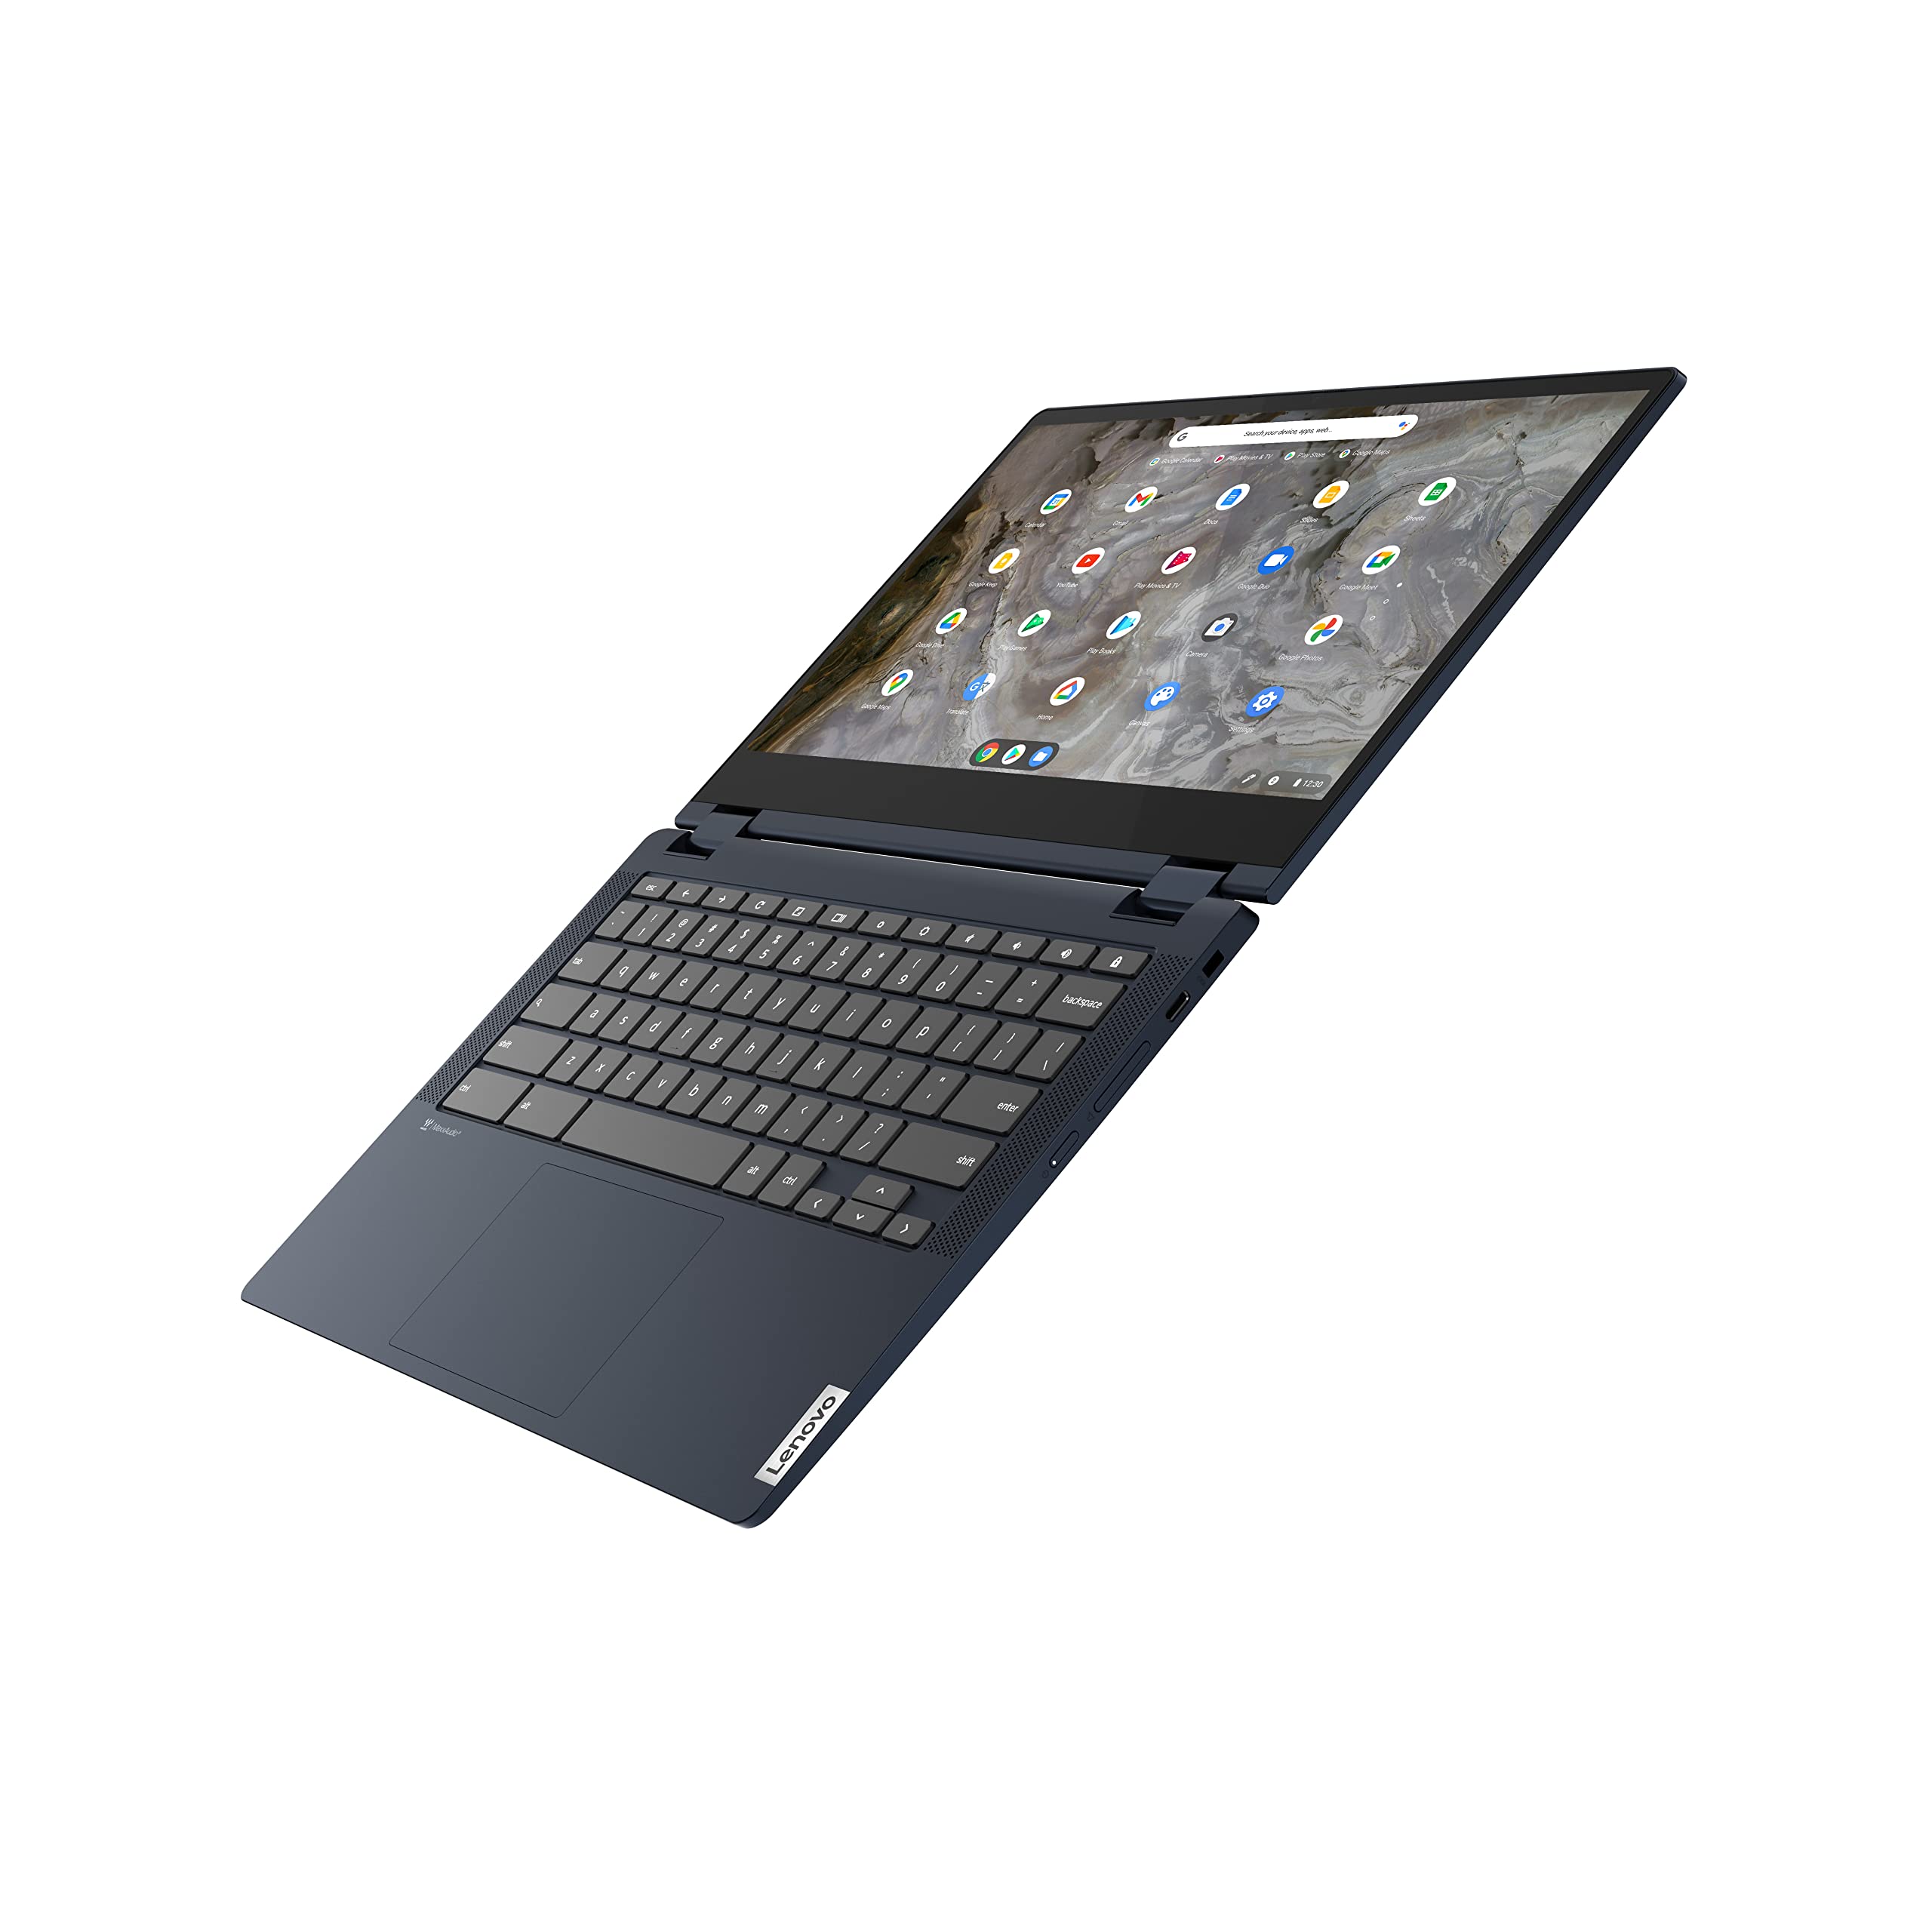 Lenovo - 2022 - IdeaPad Flex 5i - 2-in-1 Chromebook Laptop Computer - Intel Core i3-1115G4 - 13.3